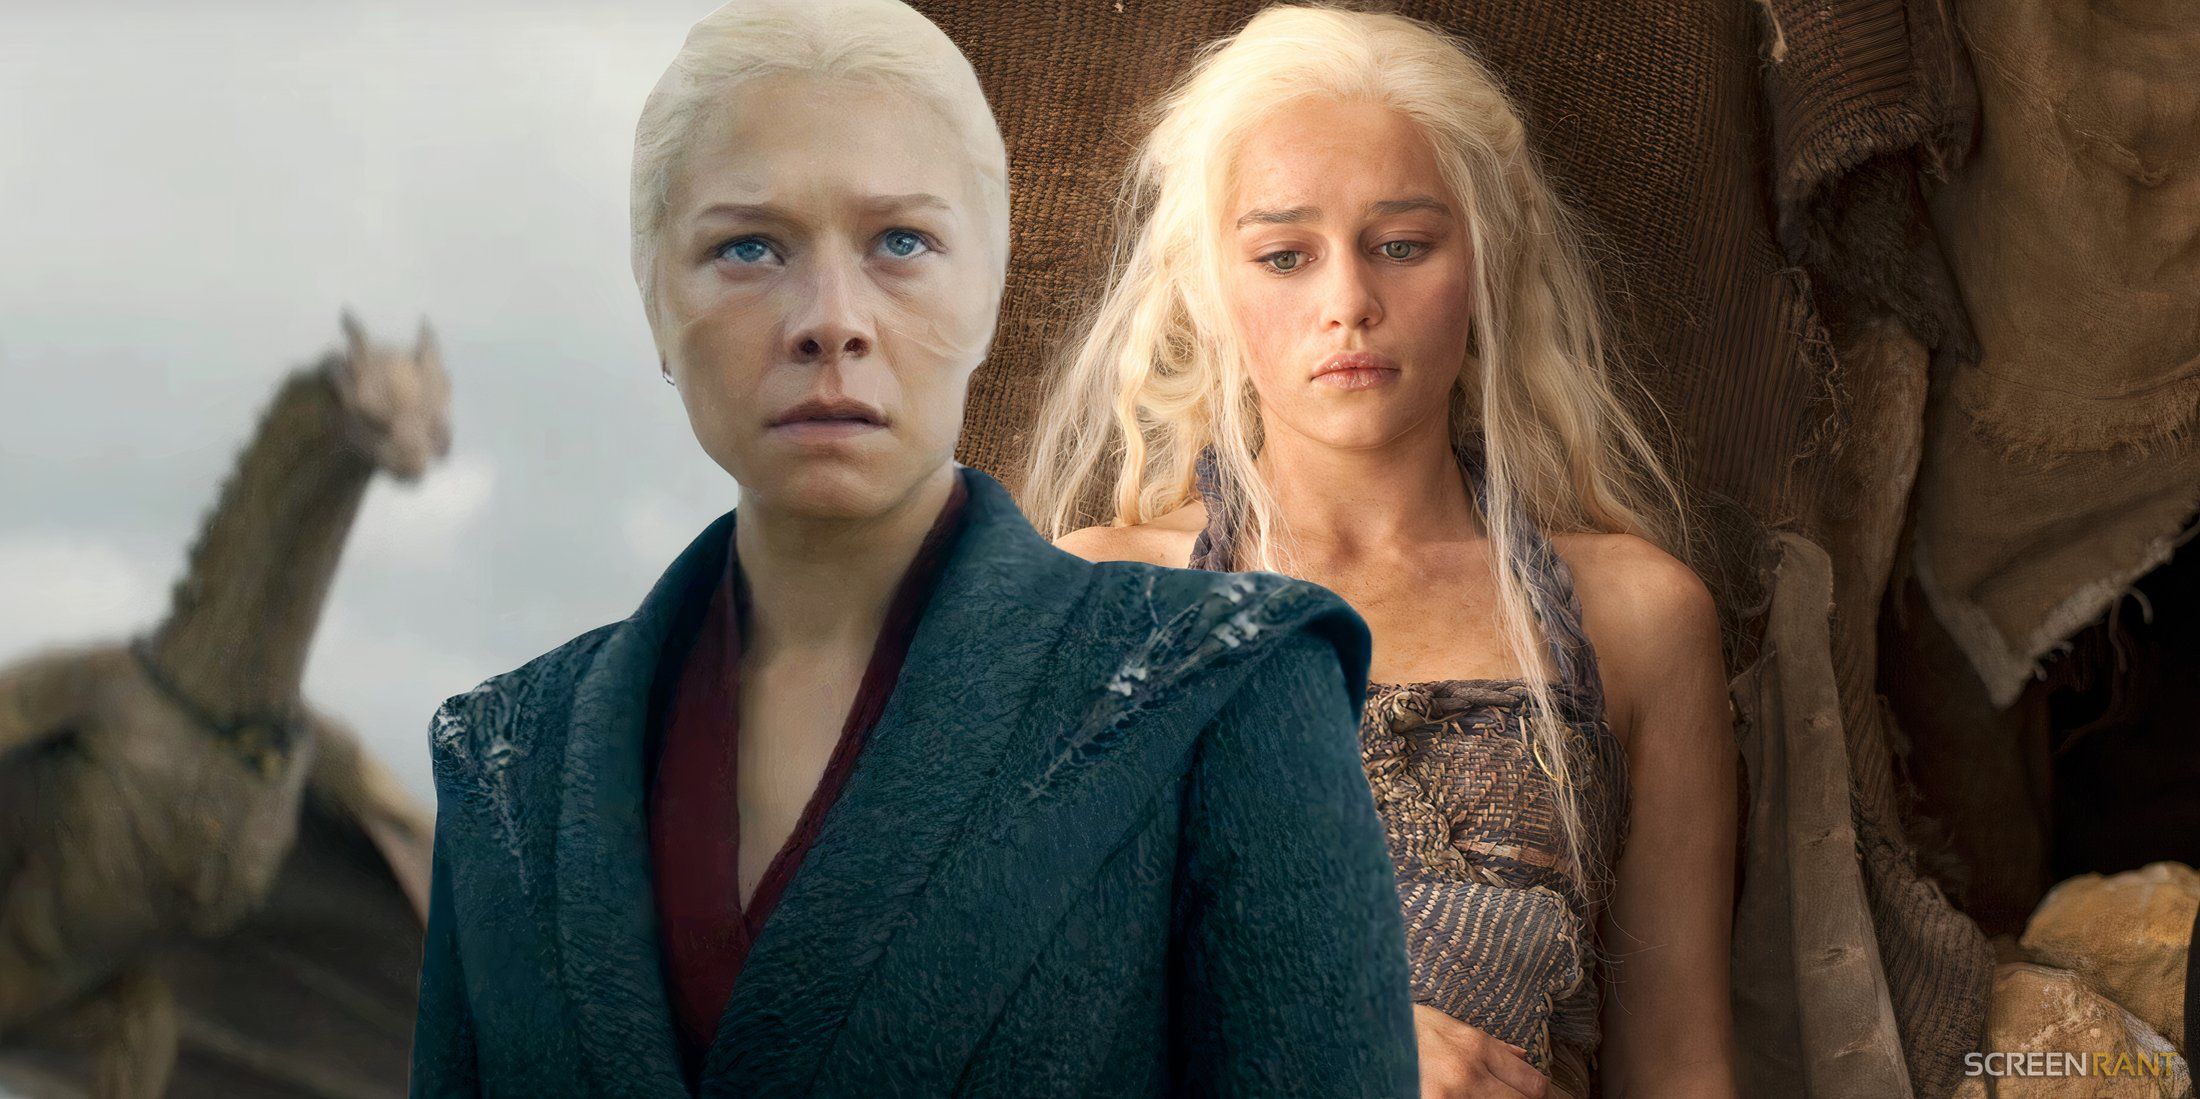 Rhaenyra Targaryen looking angry in House of the Dragon season 2 and Daenerys slumped down in Game of Thrones season 2